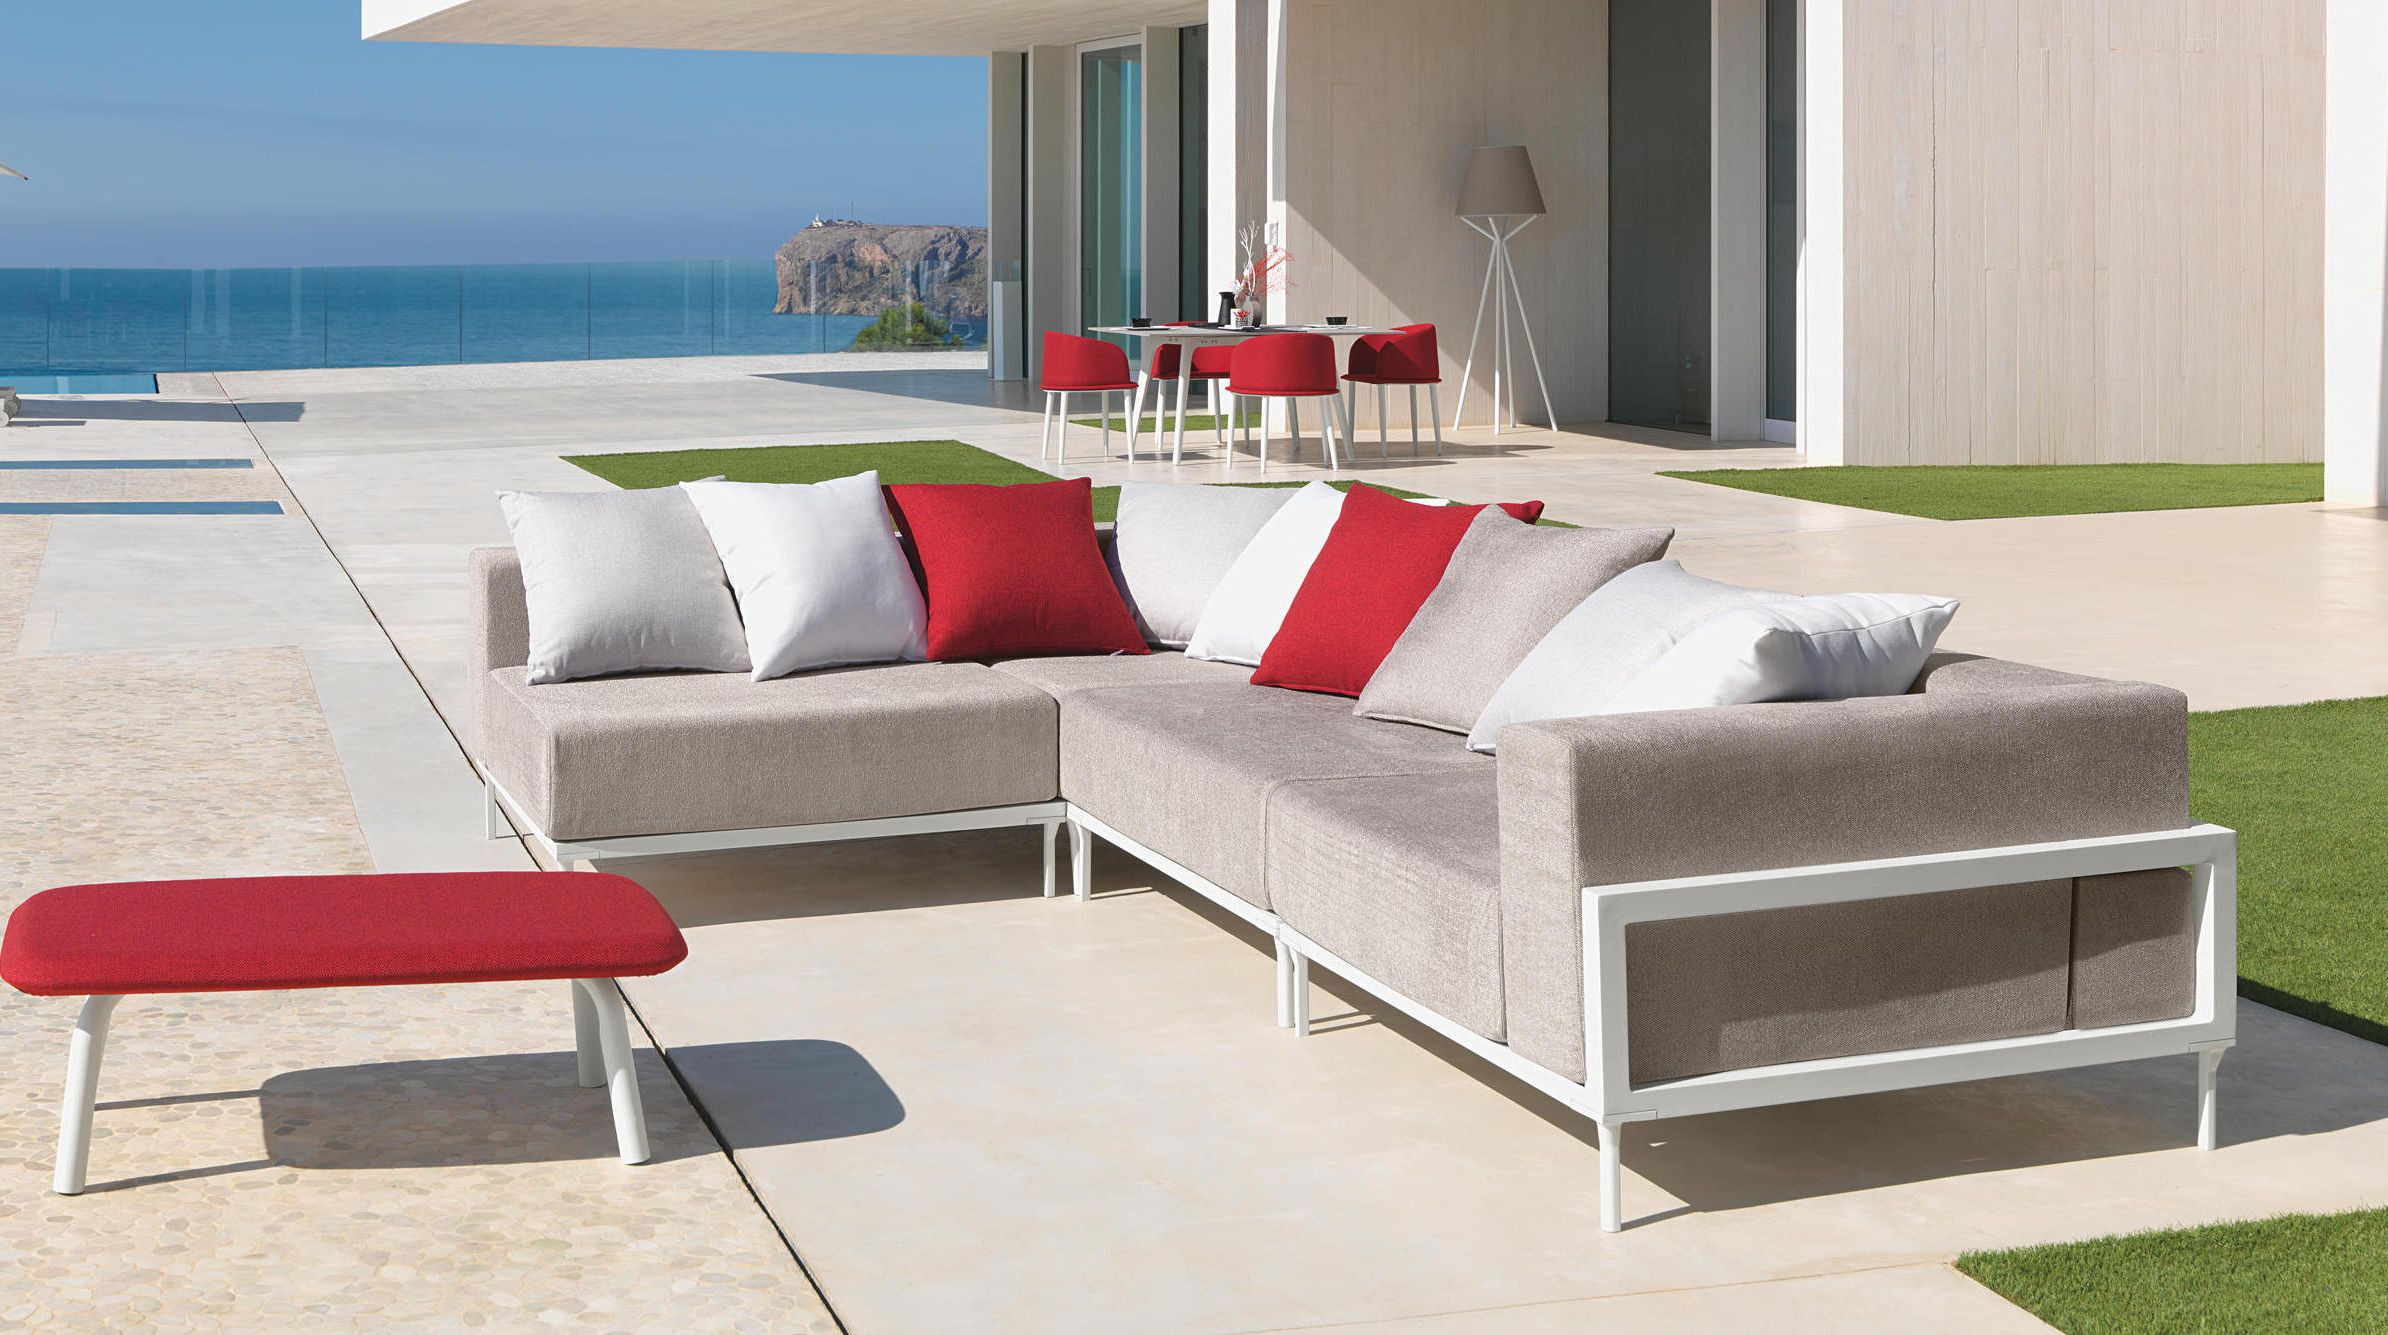 2019 Modular Outdoor Arm Chairs For Zapropos Aluminum Modular Sofa – Couture Outdoor (View 2 of 15)